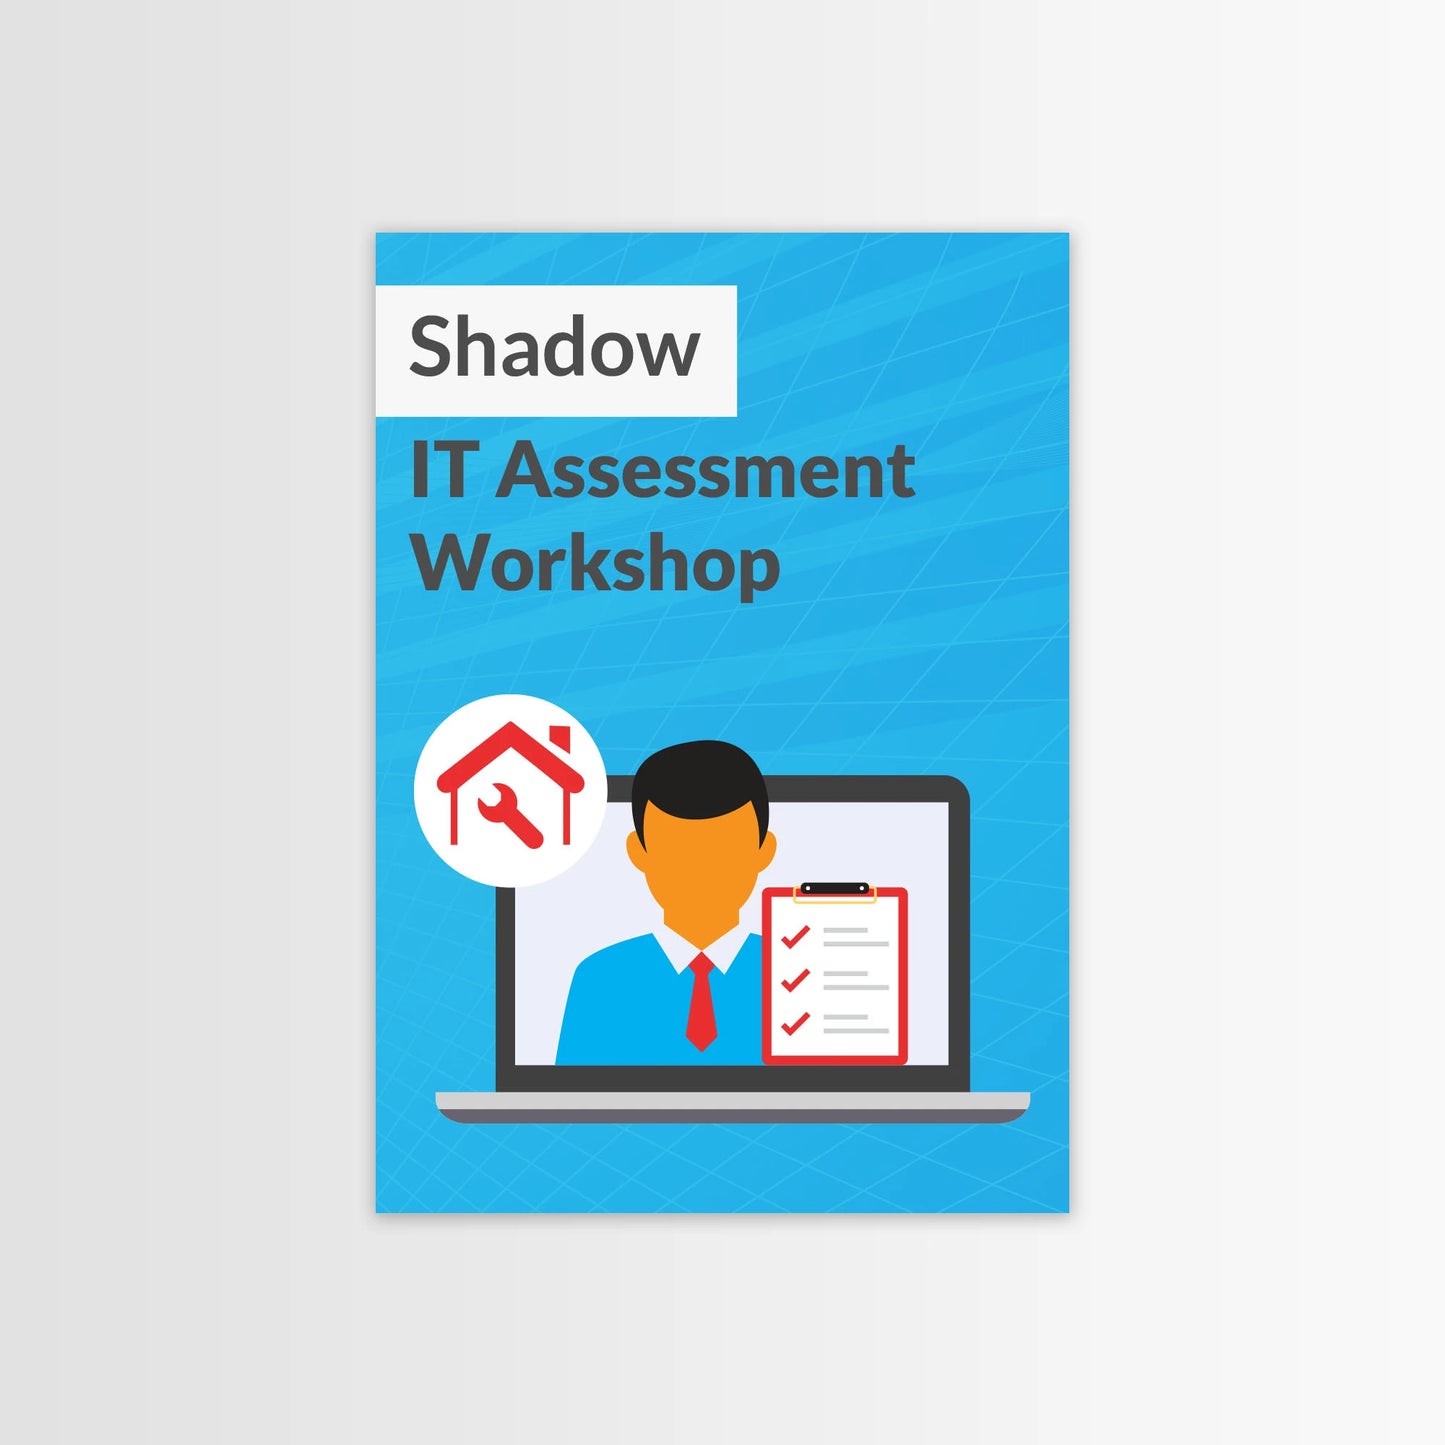 Shadow IT Assessment Workshop